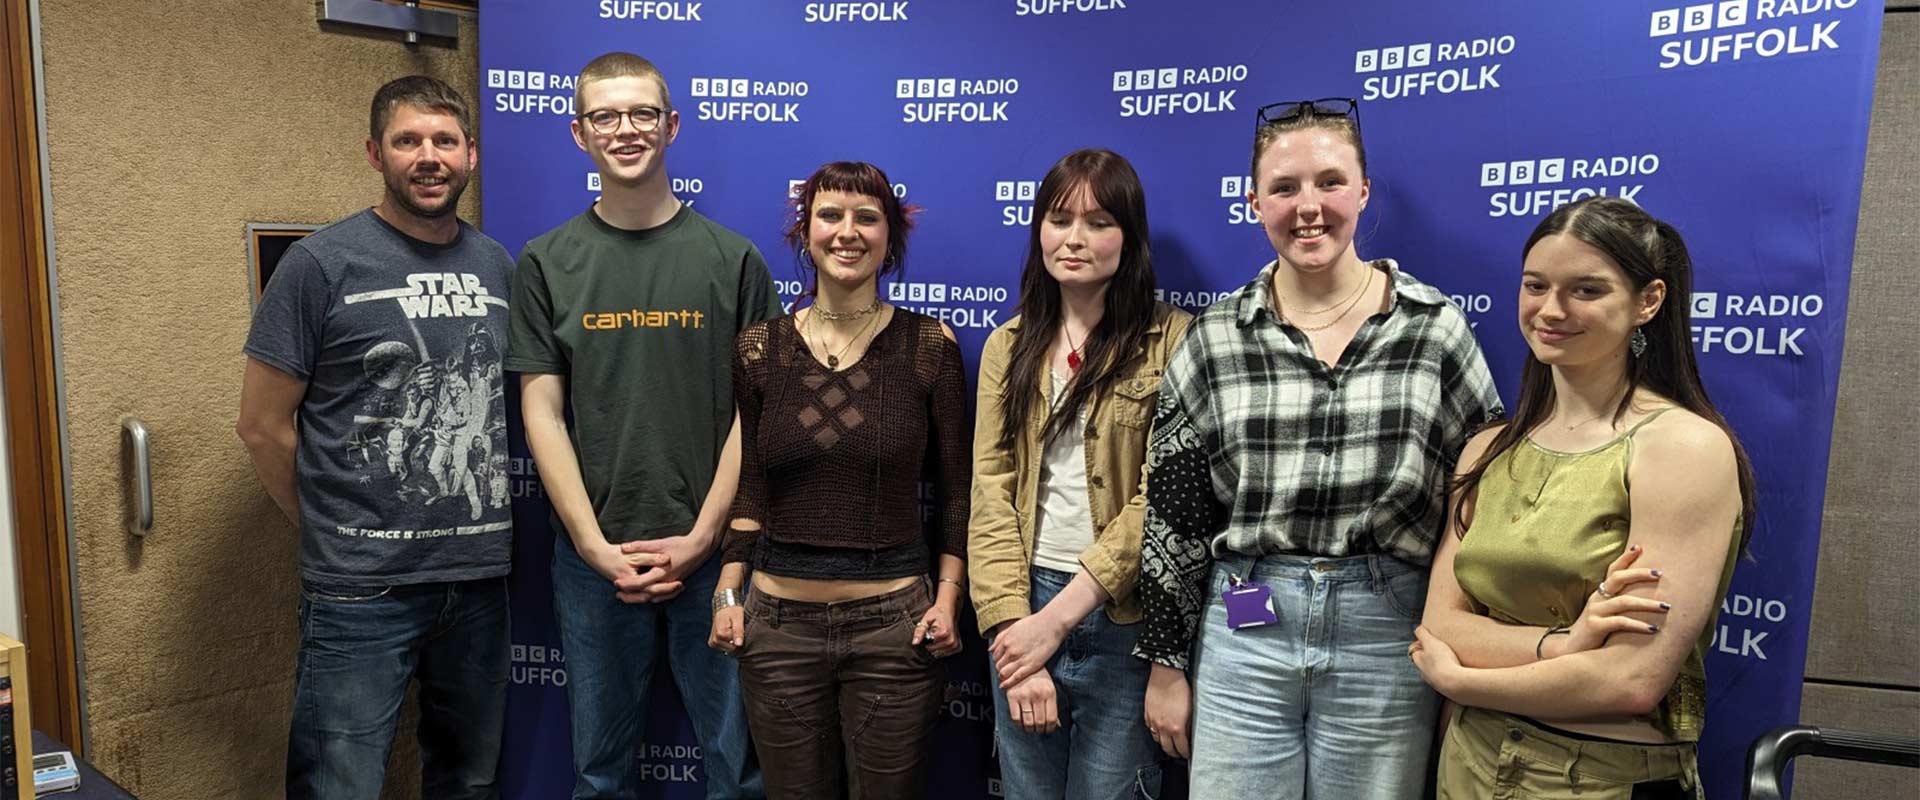 BBC Radio Suffolk Takeover